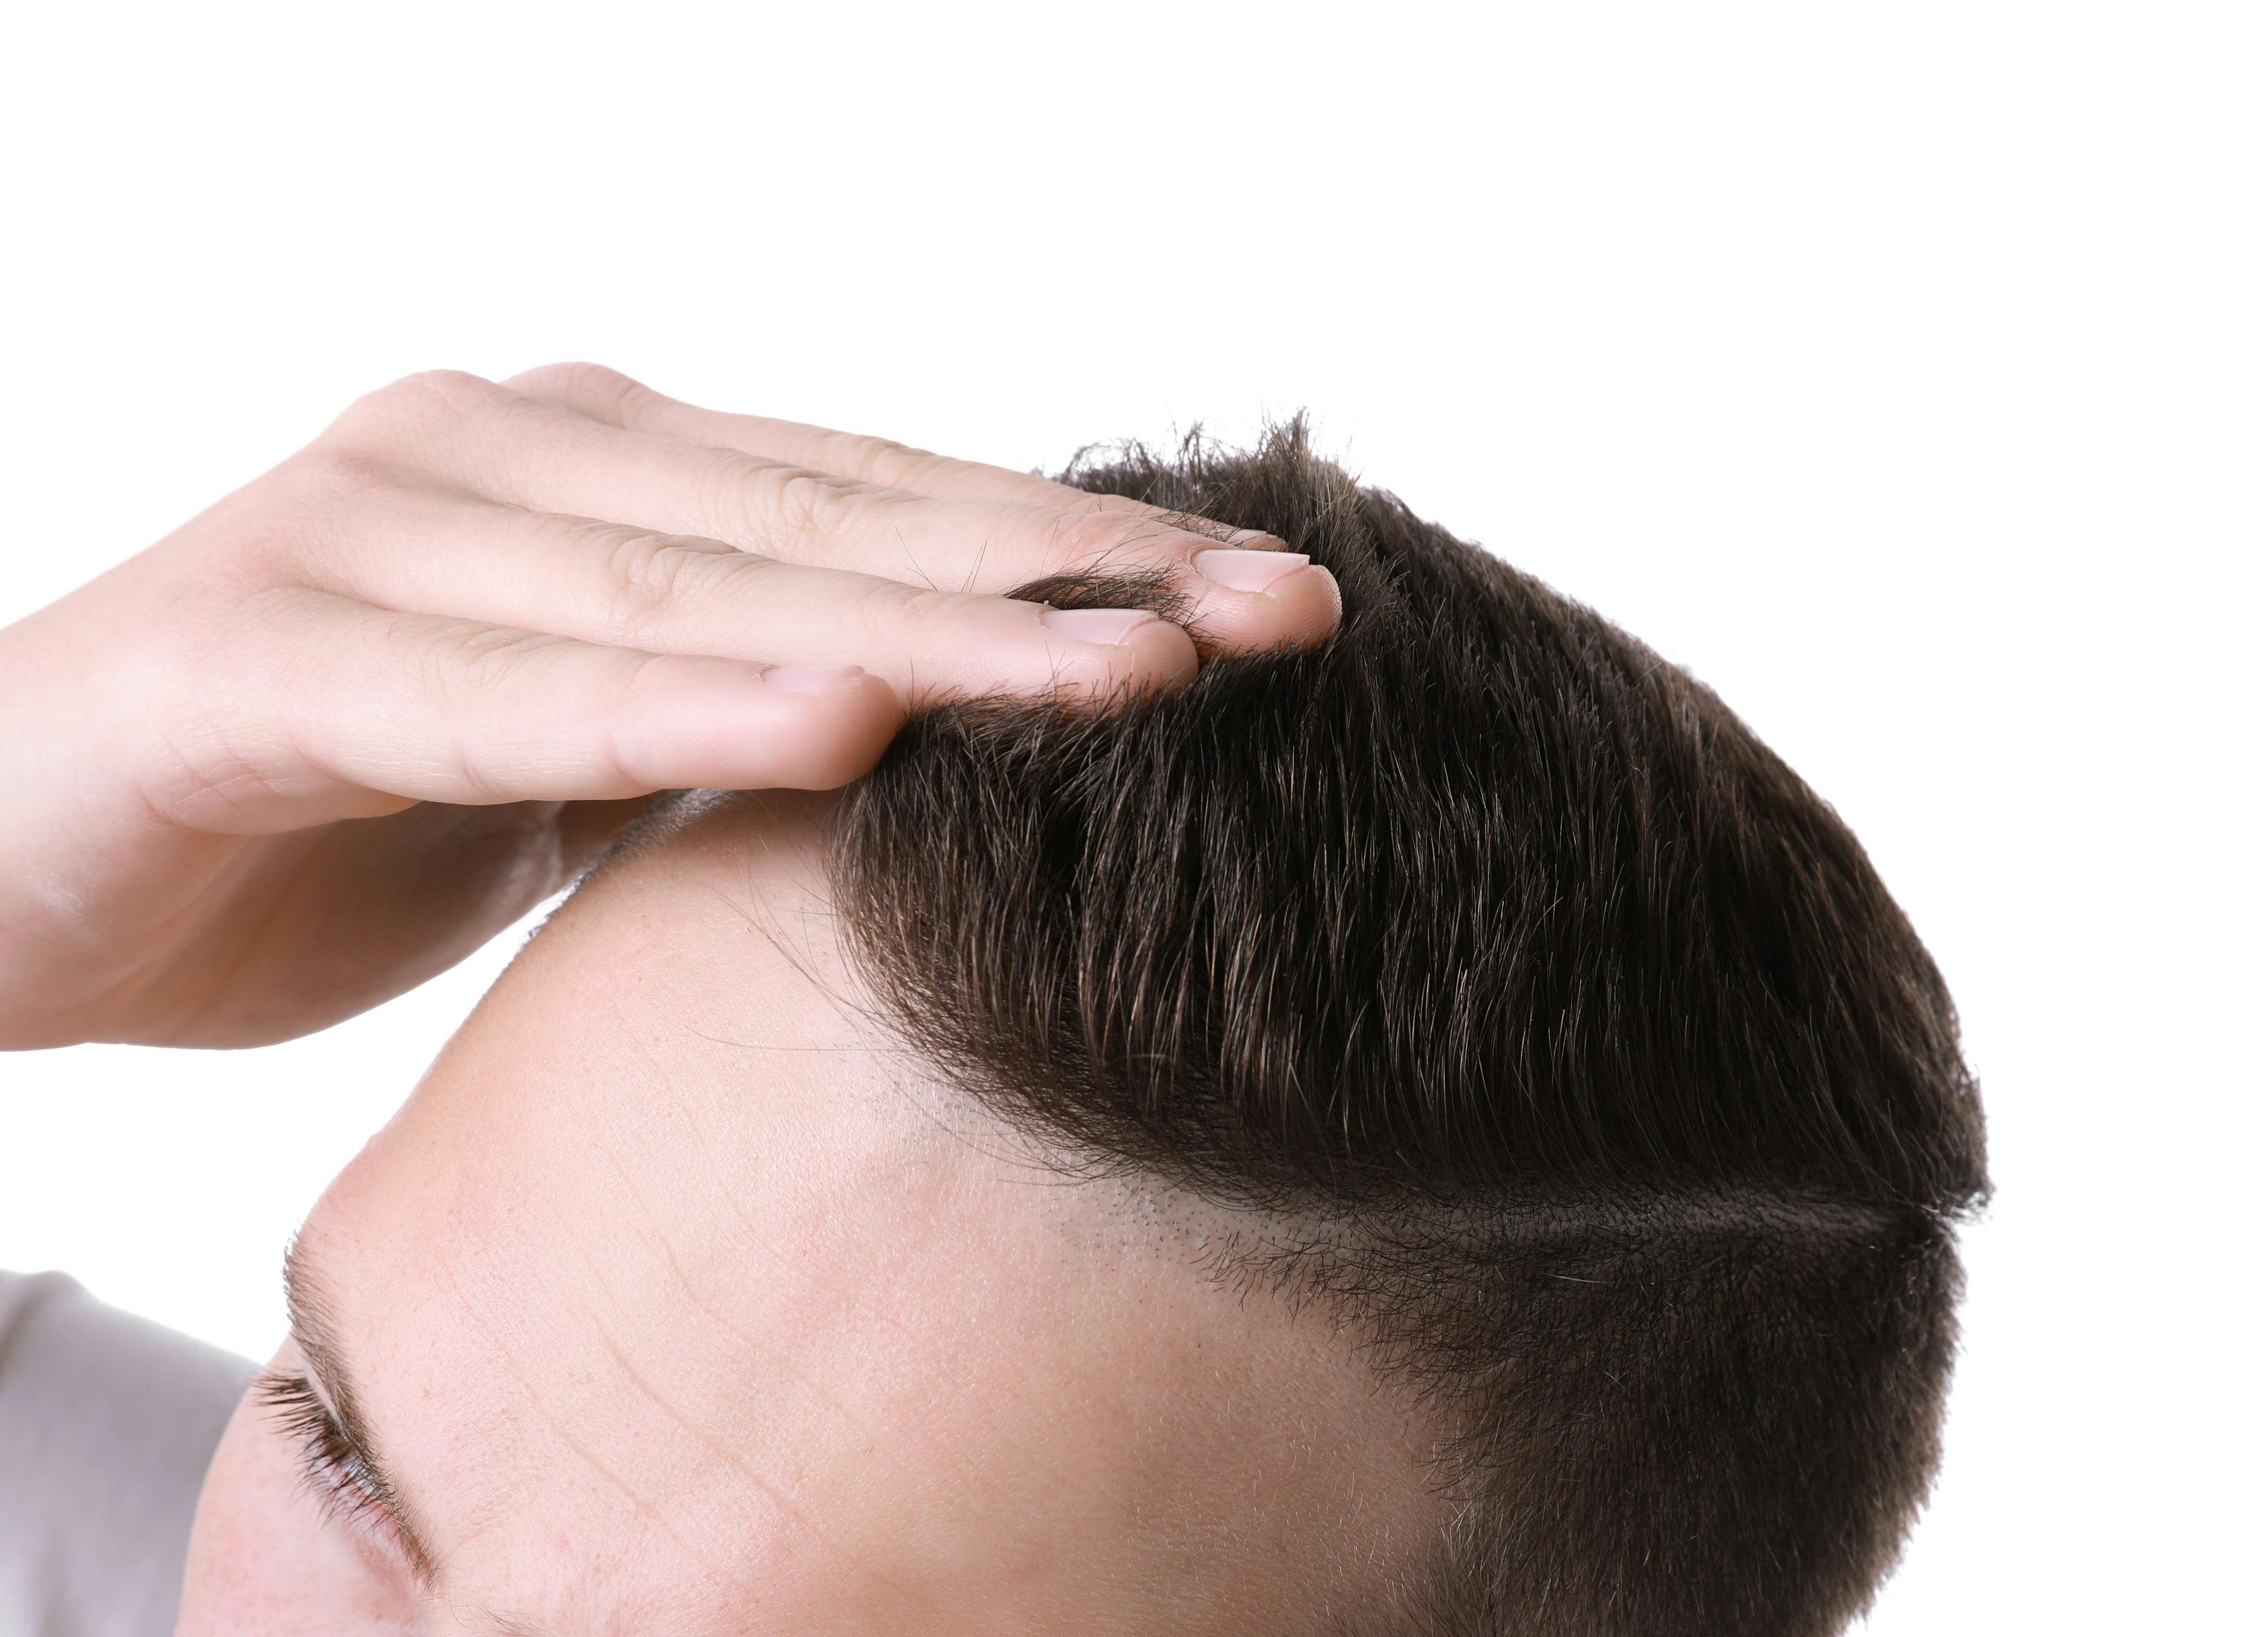 Man with hair loss measuring regrowth | Image Credit: Pixel-Shot - stock.adobe.com